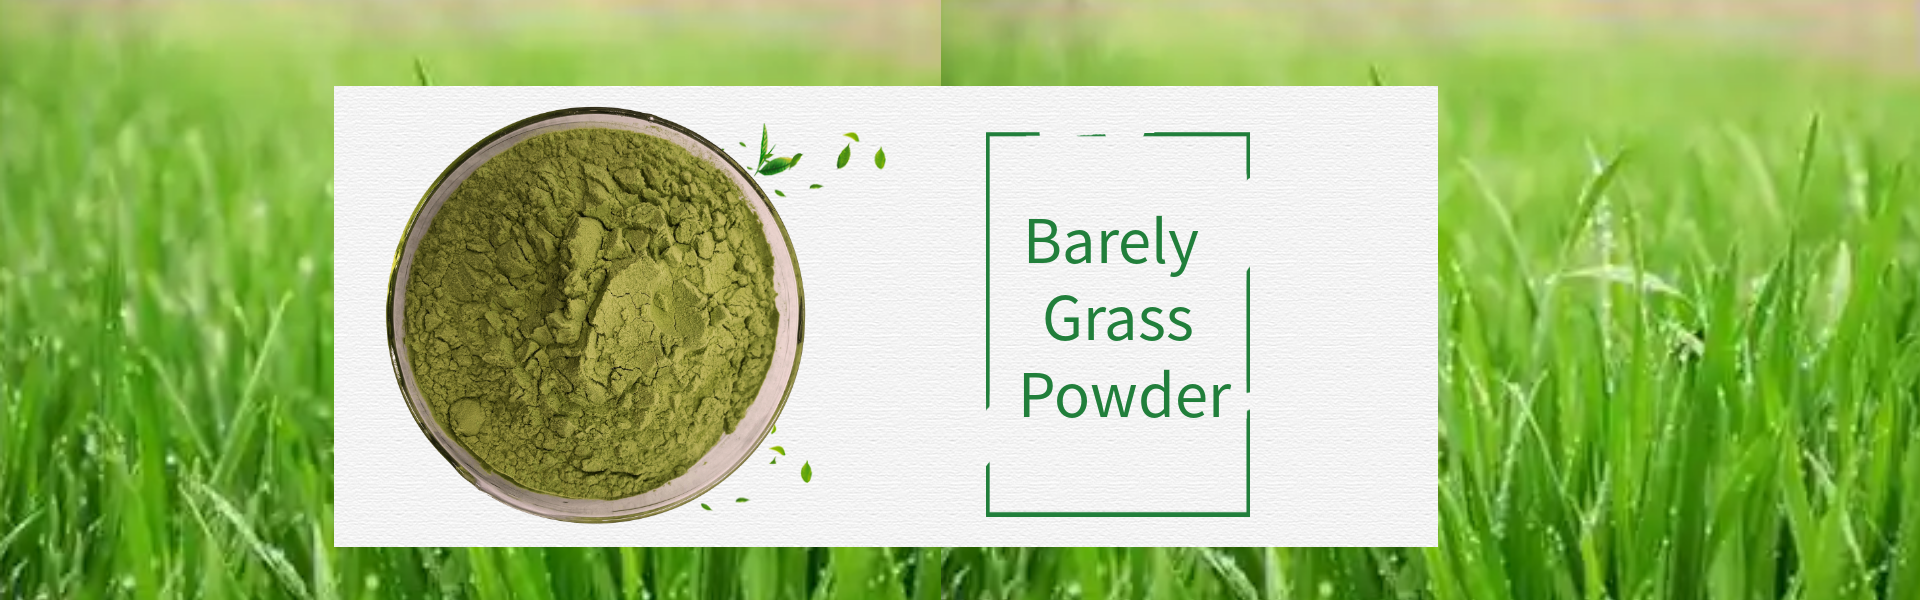 Barely Grass Powder 1